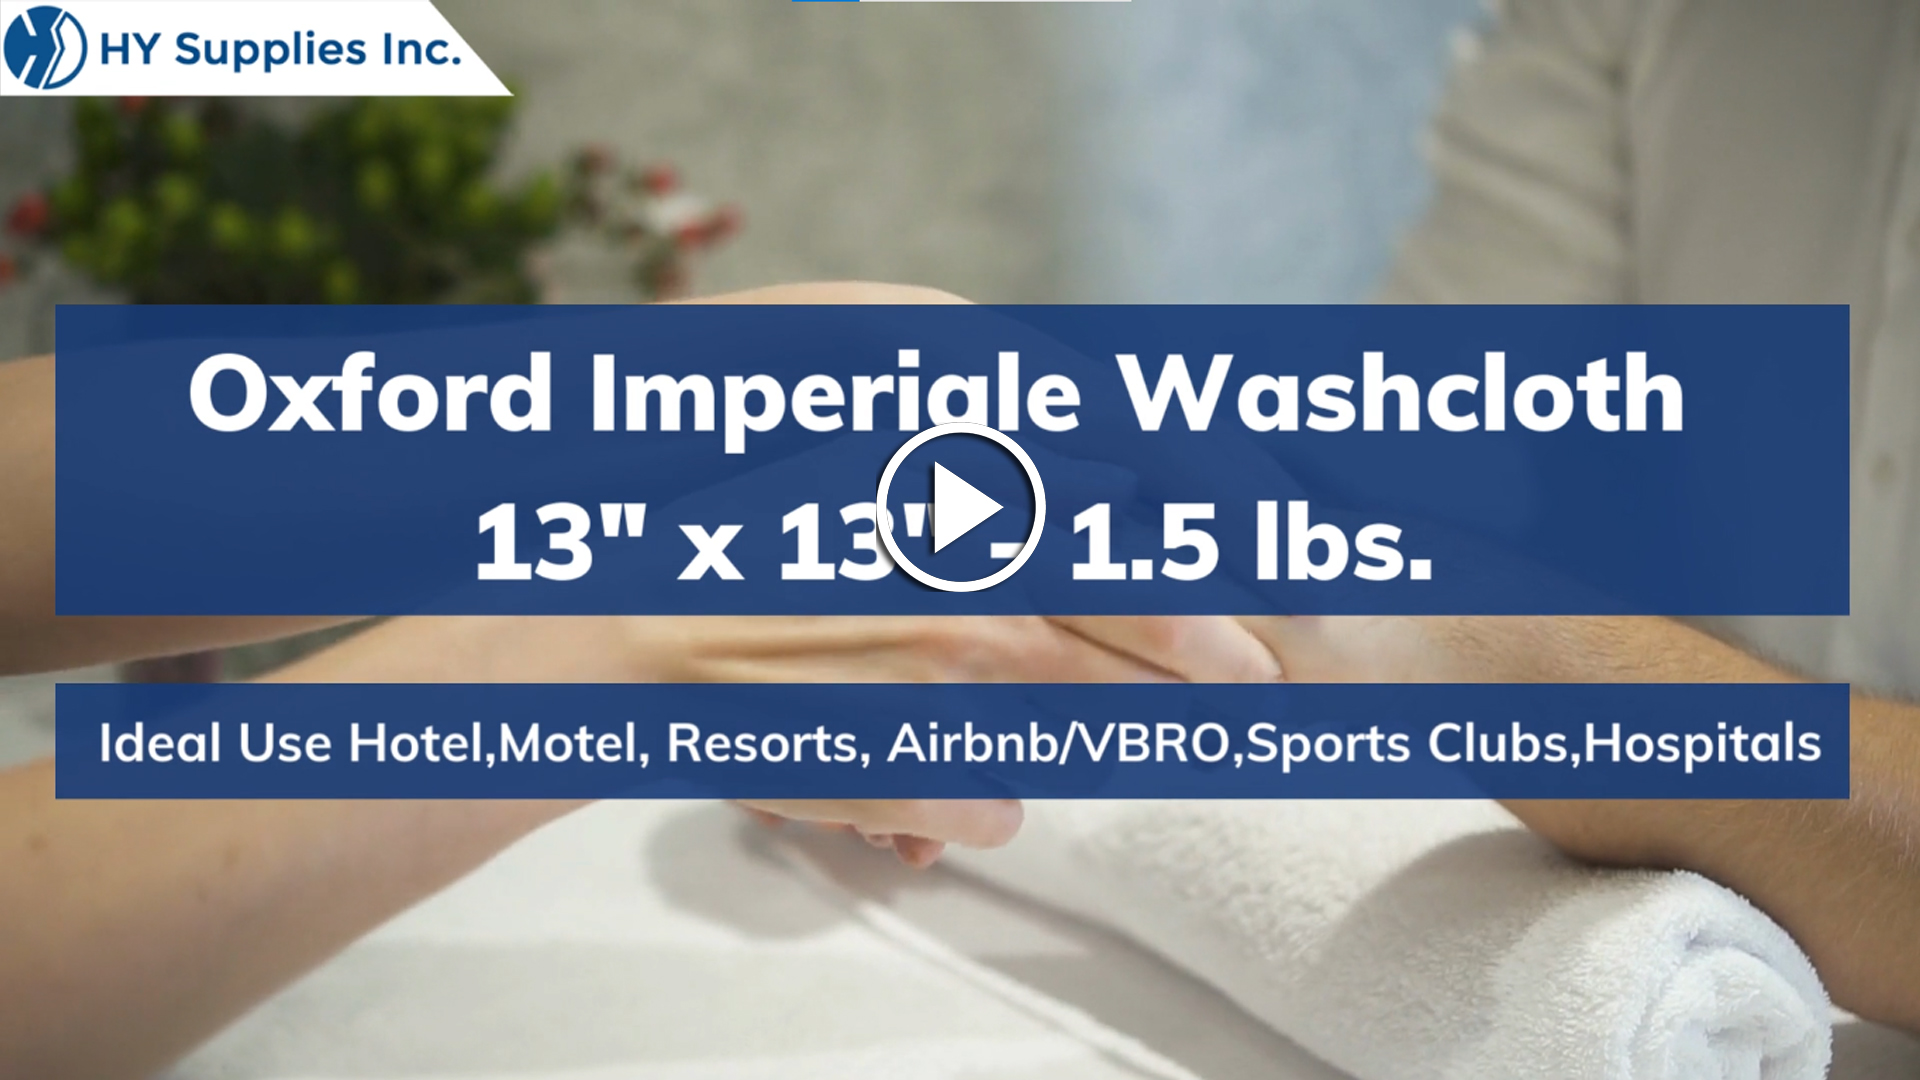 Oxford Imperiale Washcloth - 13" x 13"- 1.5 lbs.